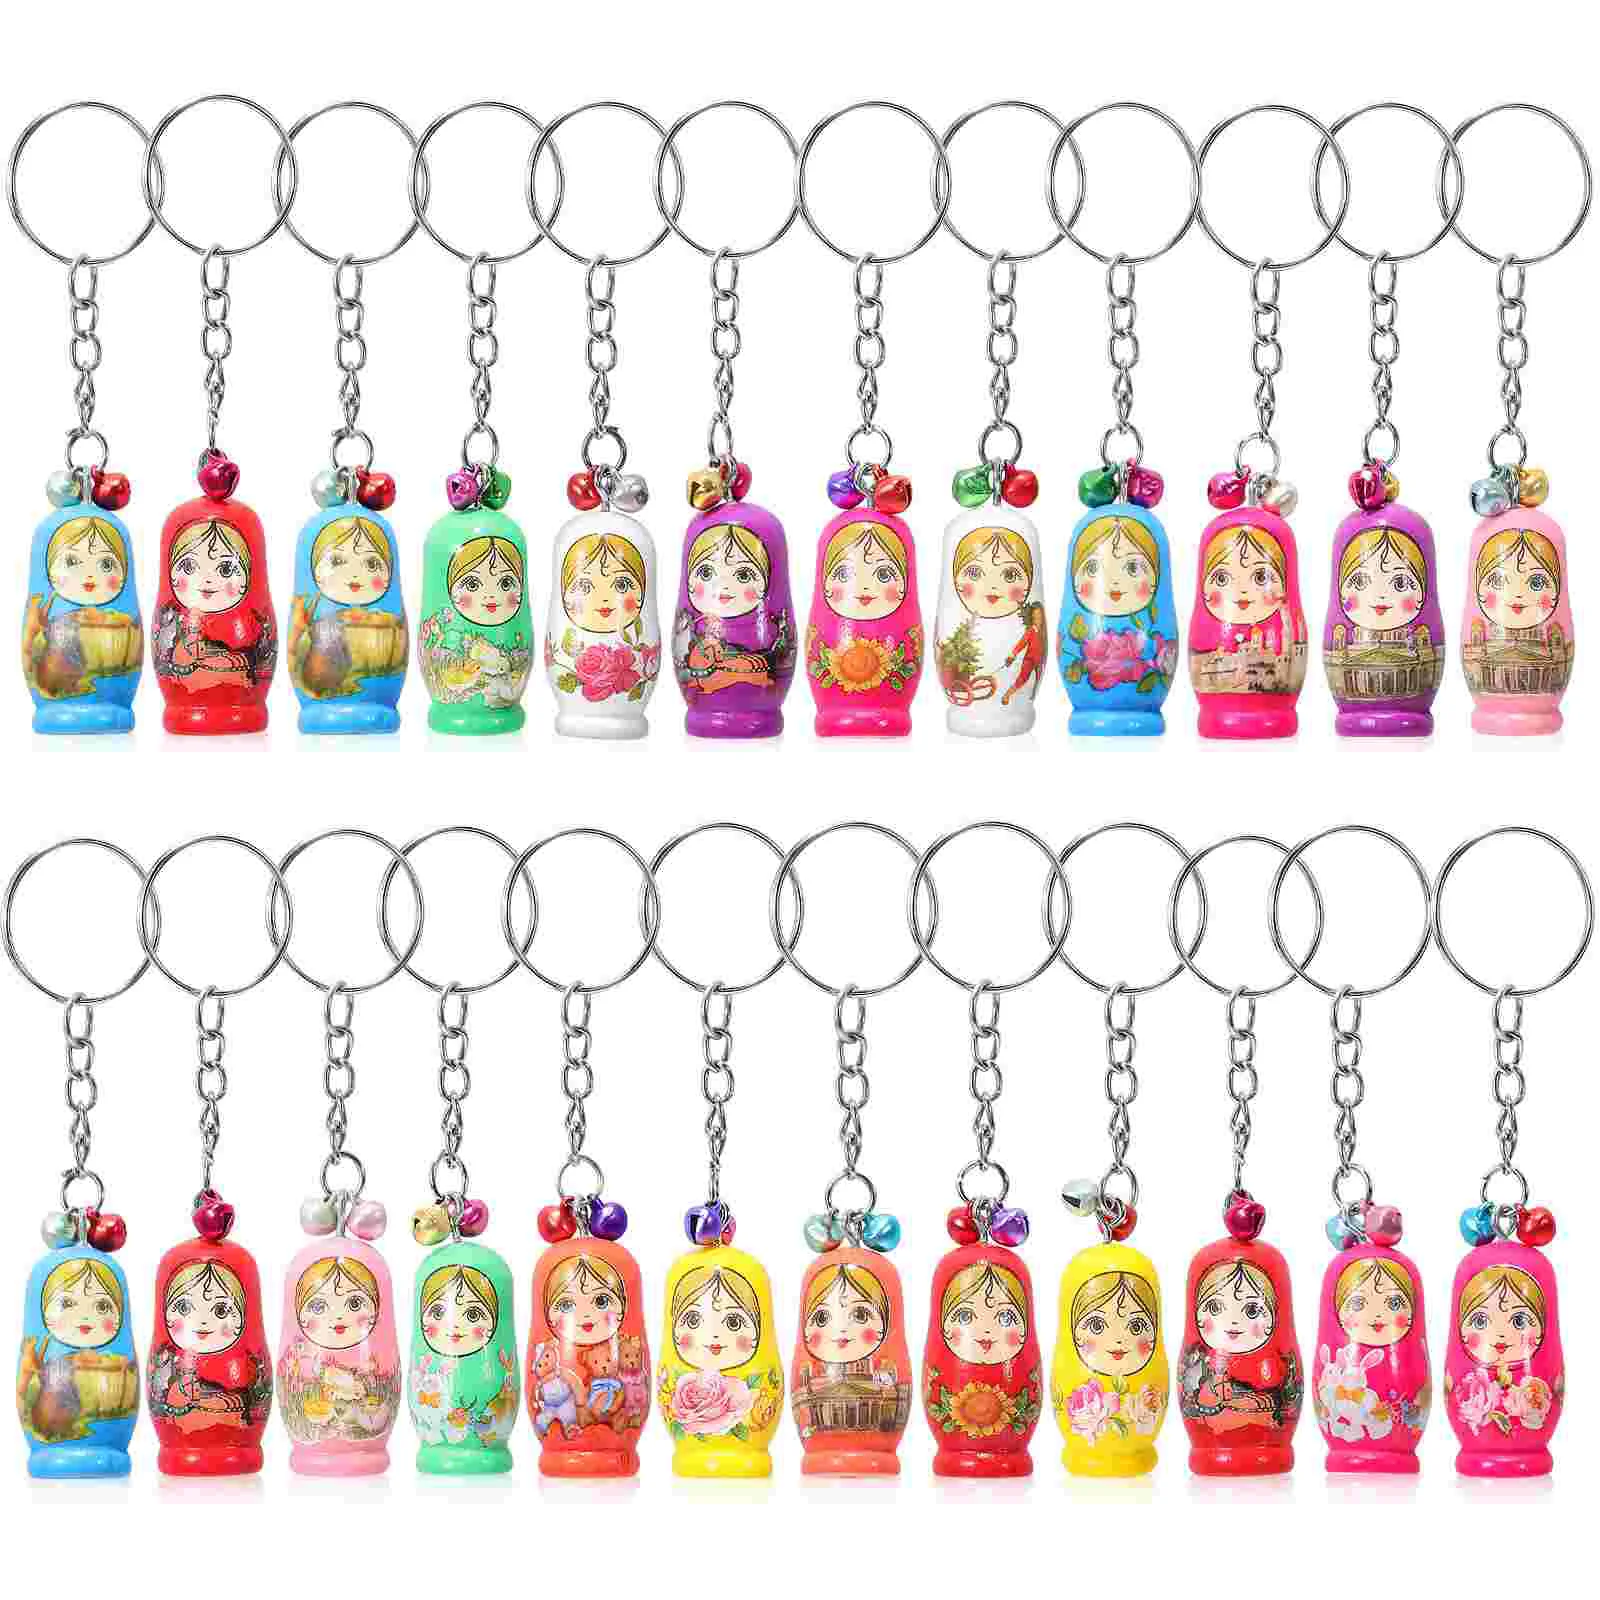 

24 Pcs Matryoshka Keychain Holders Russian Nesting Dolls Keychains Wooden Rings Car Pendant